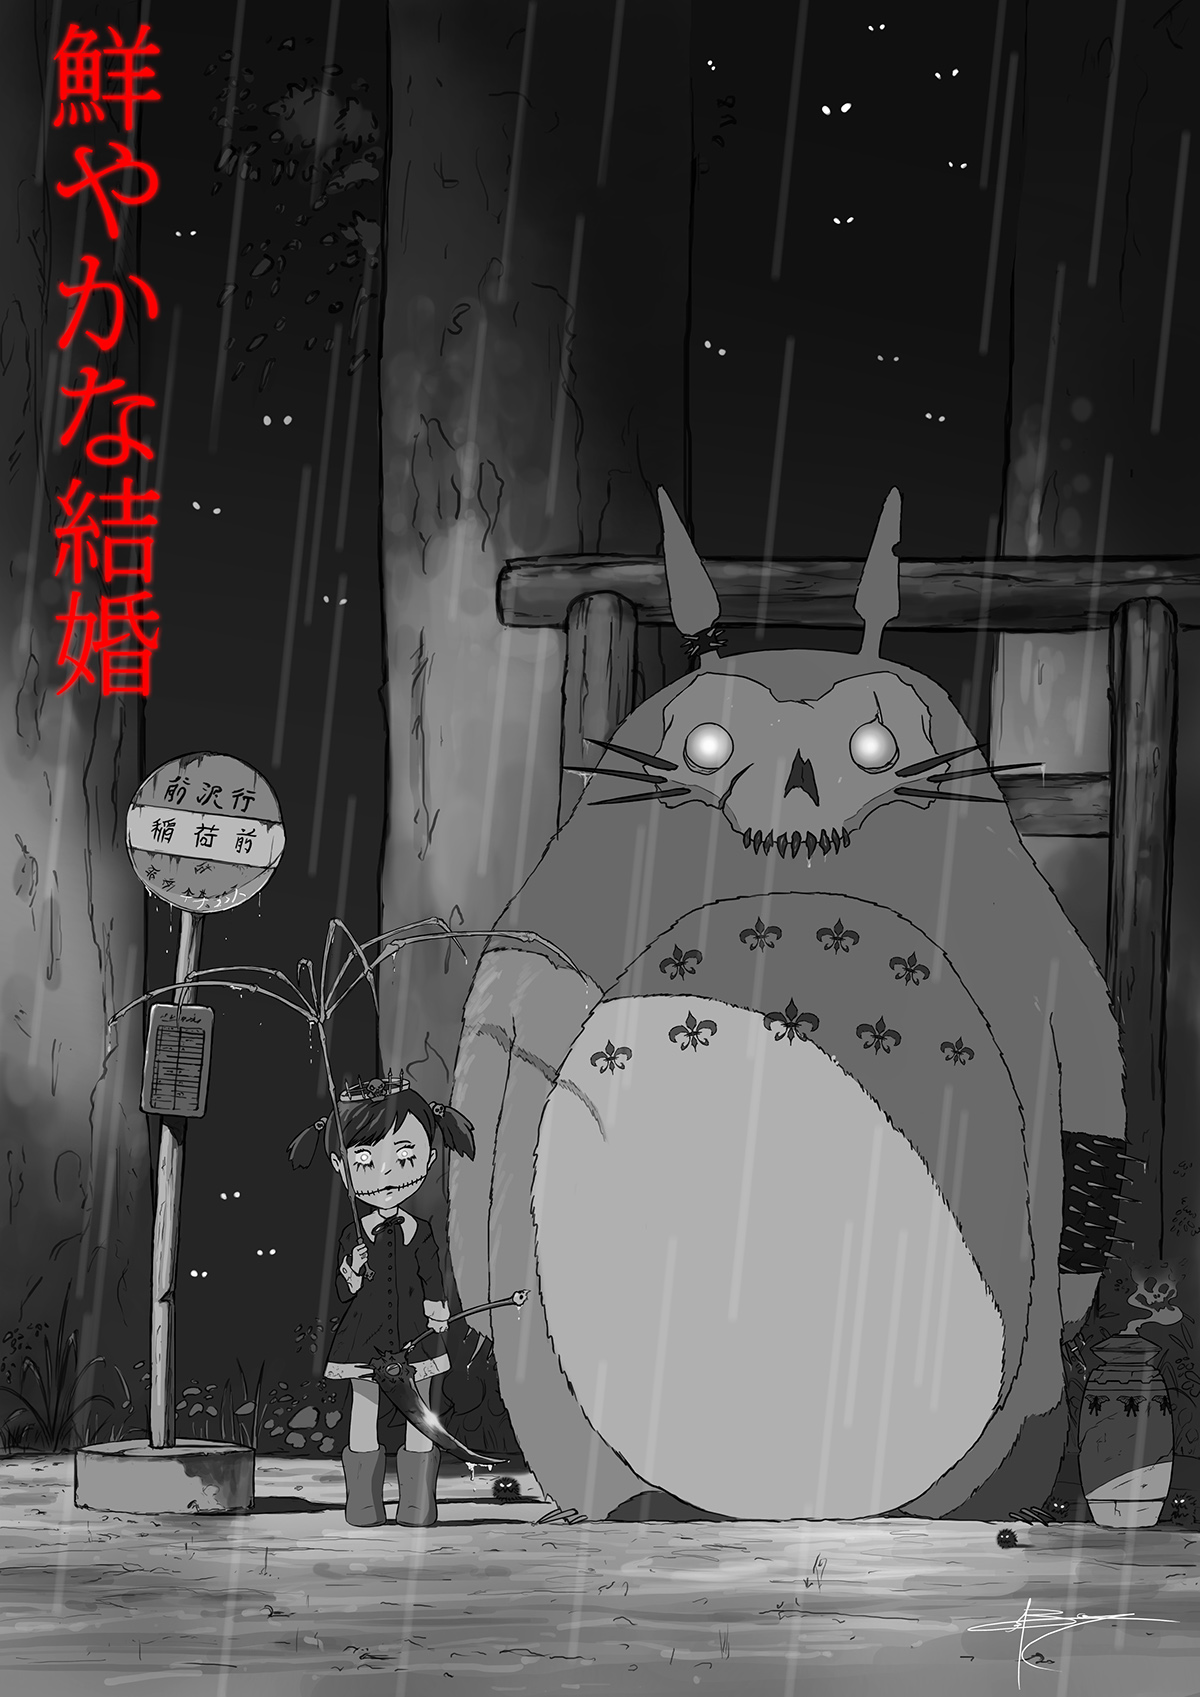 totoro anime my neighboor totoro gothic japanese Ghibli